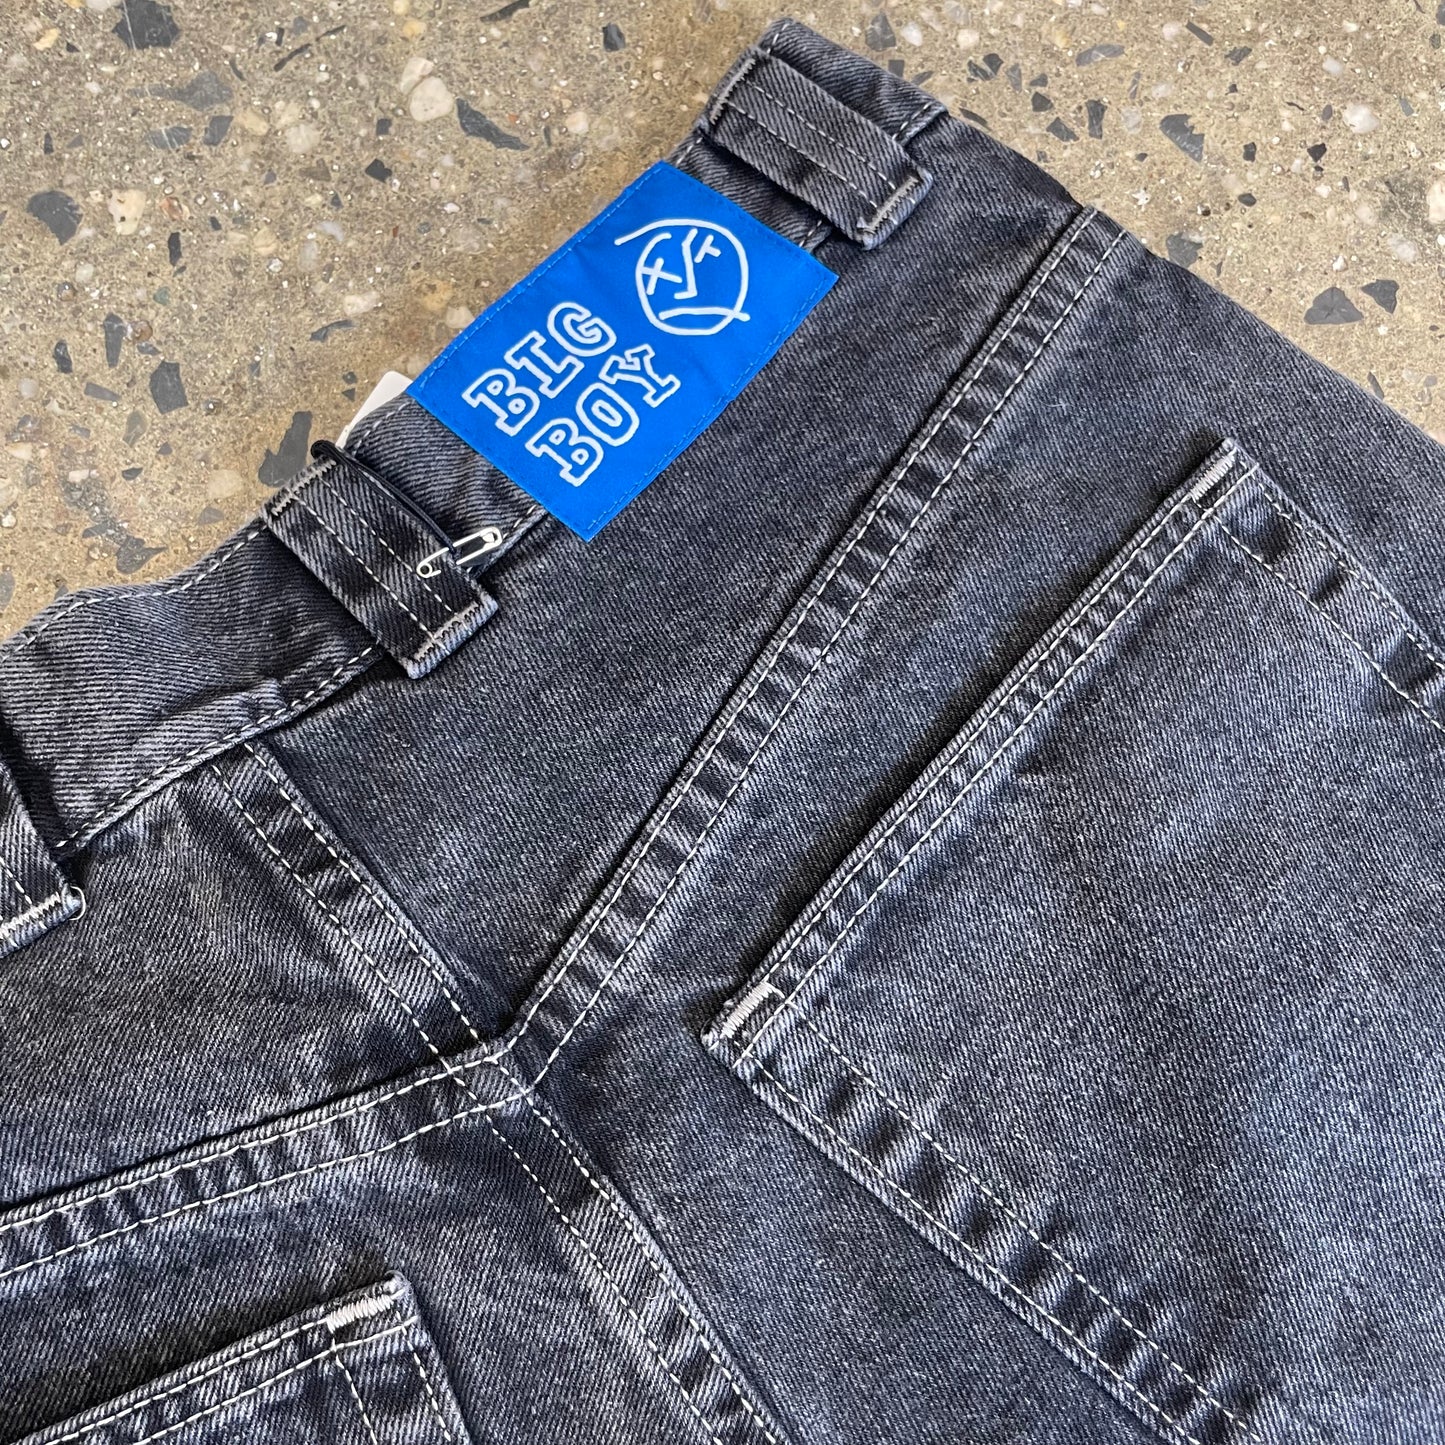 closeup of back pocket and blue patch logo